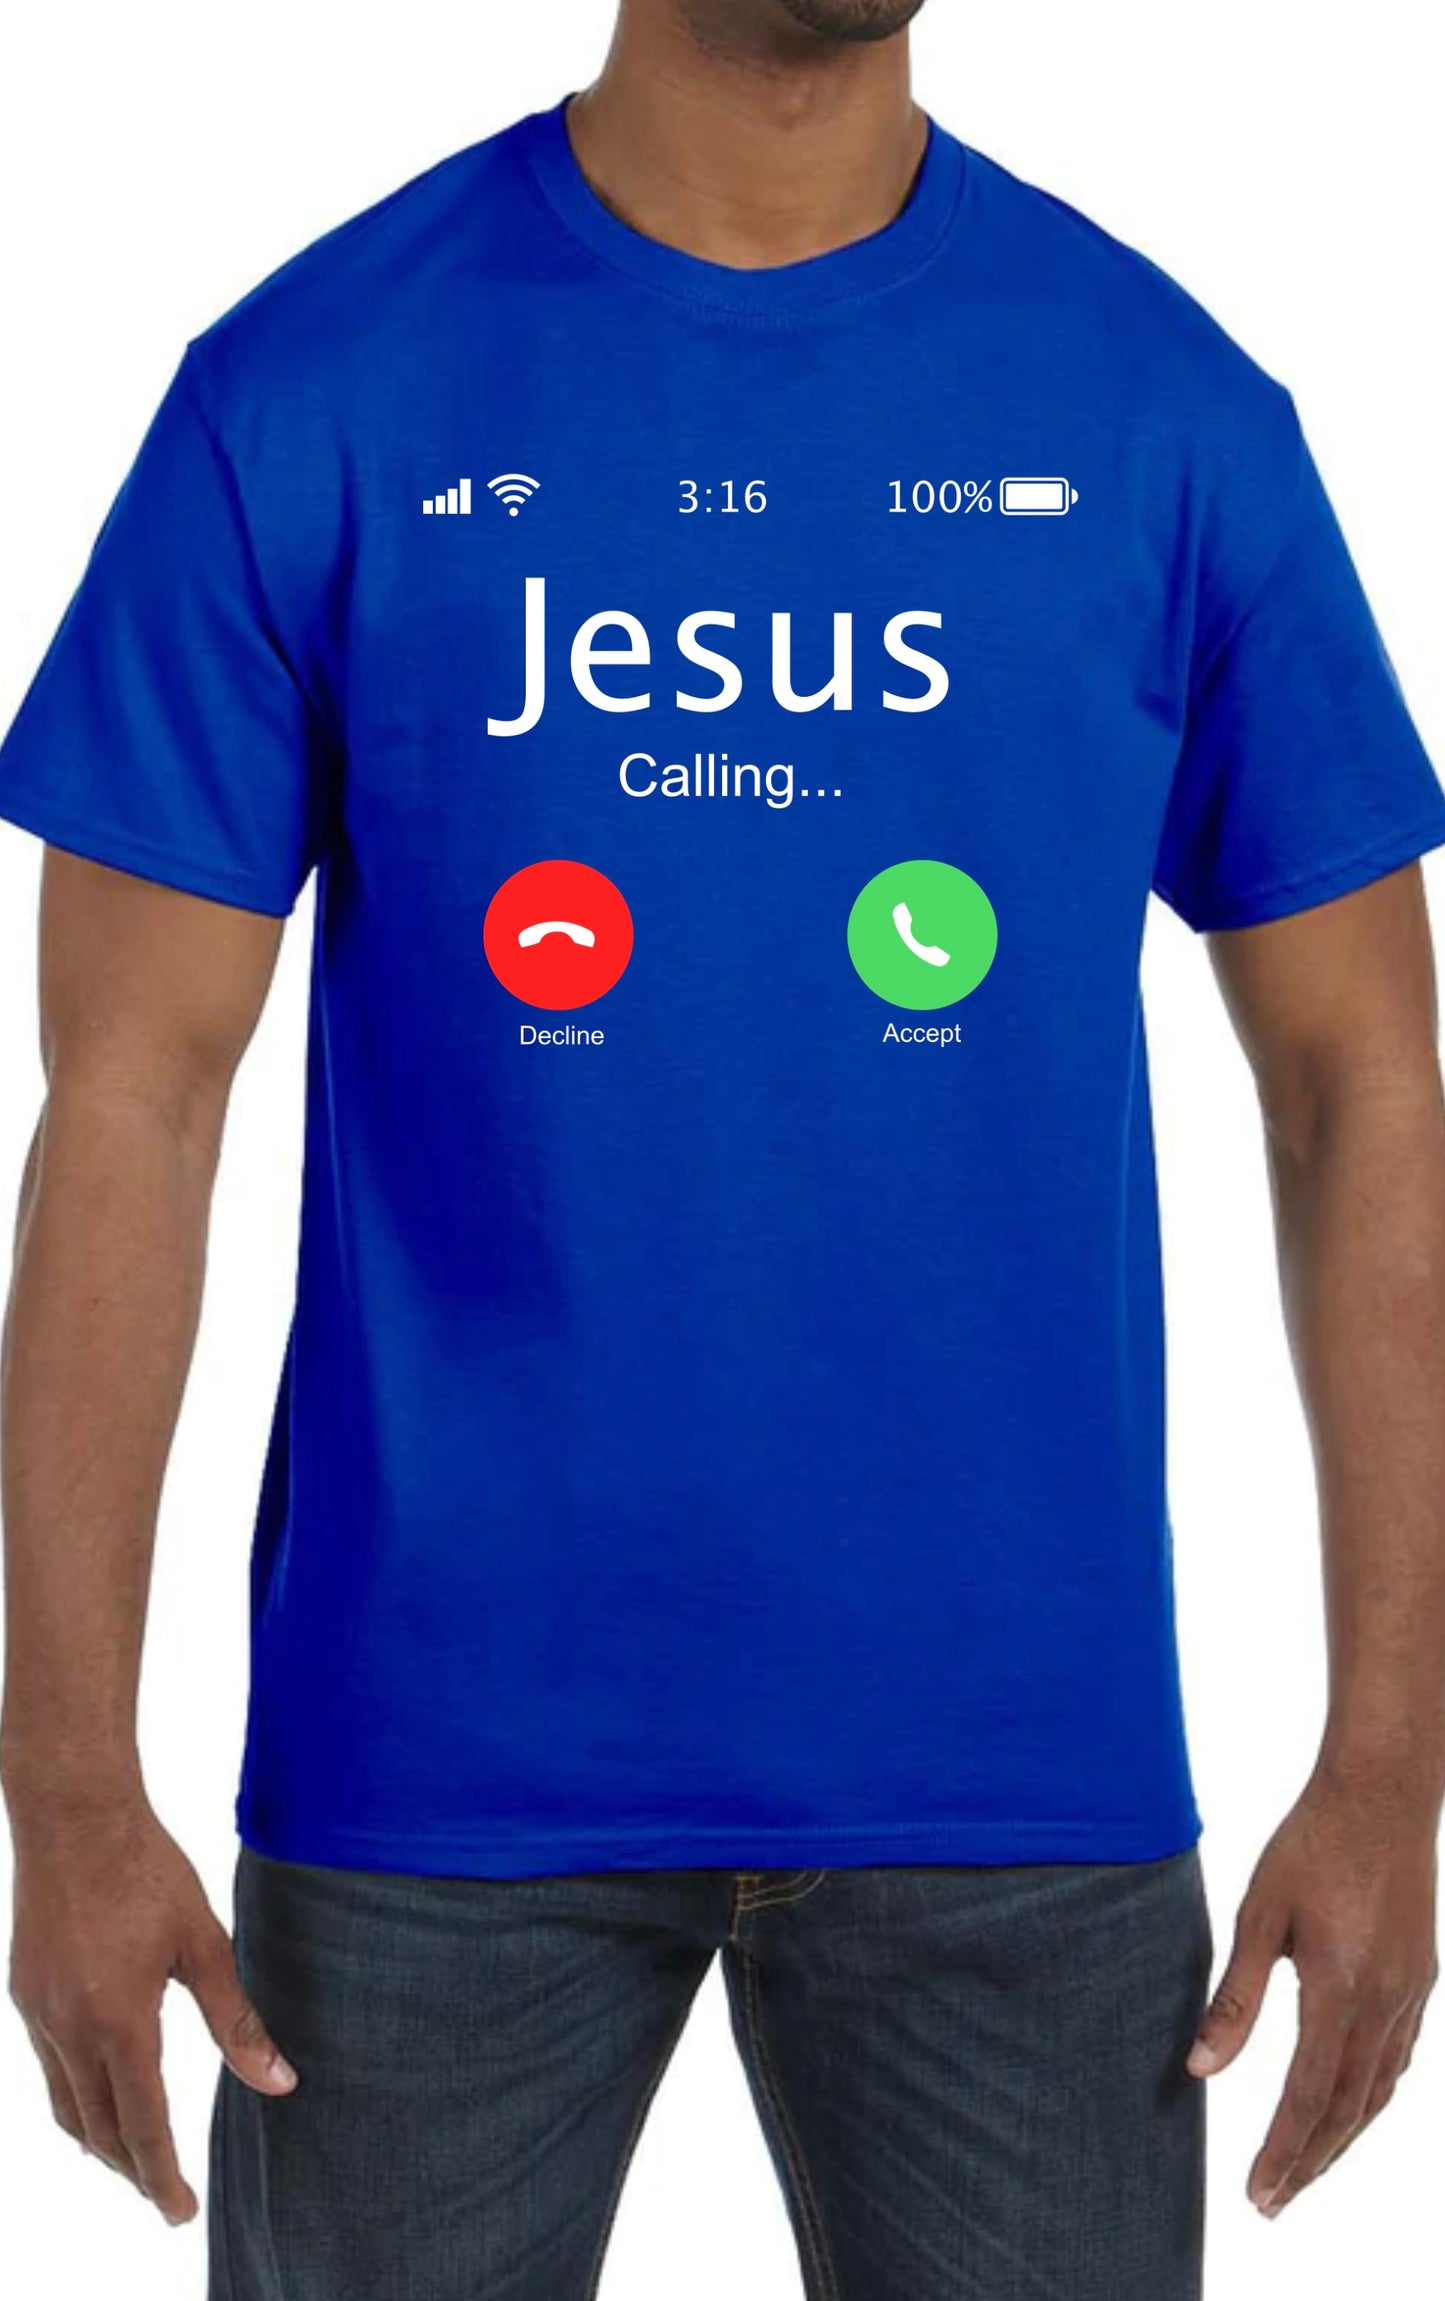 Jesus is Calling Shirt